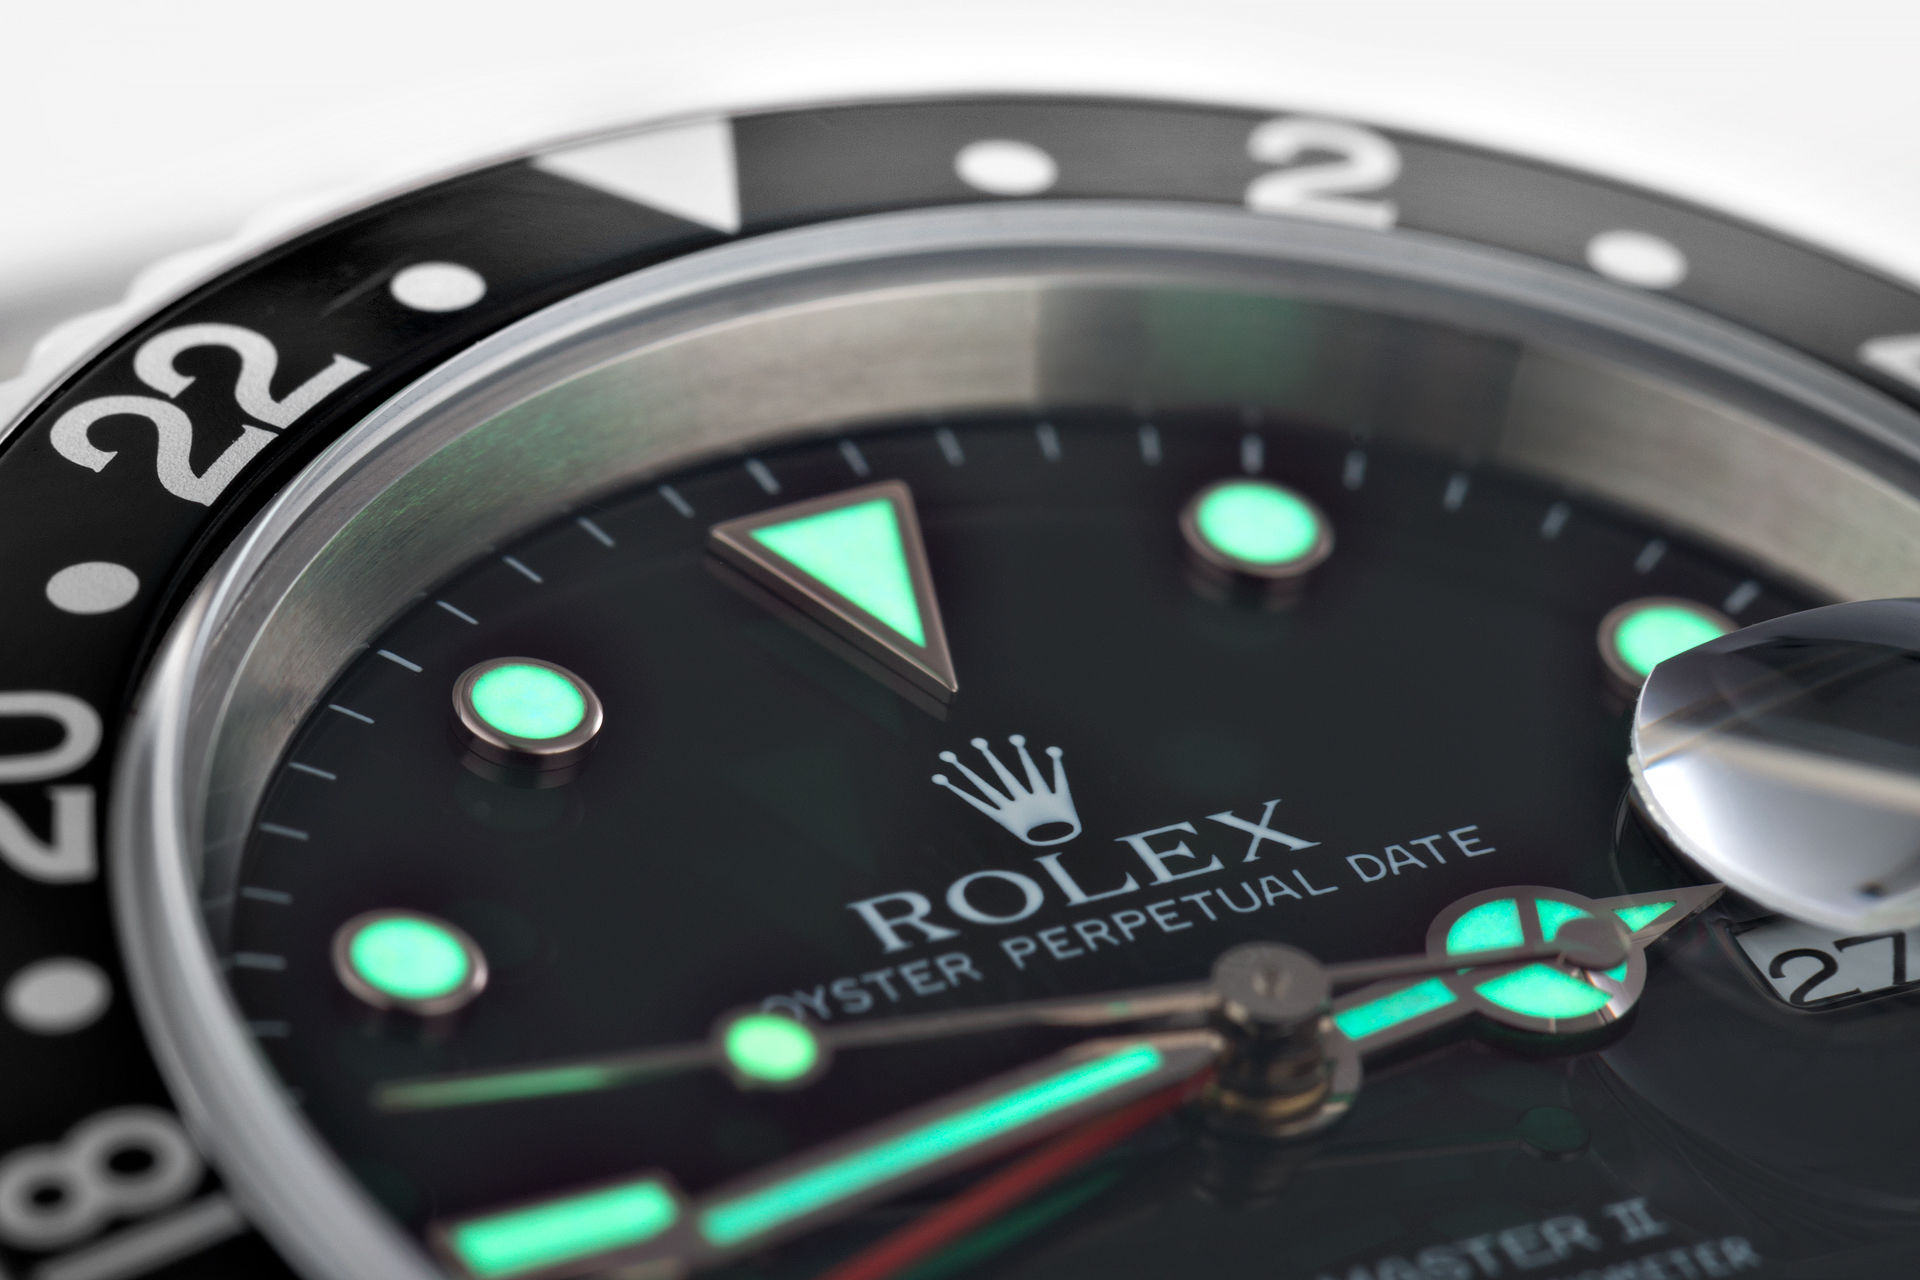 ref 16710 | Complete Set 'All Black' | Rolex GMT-Master II